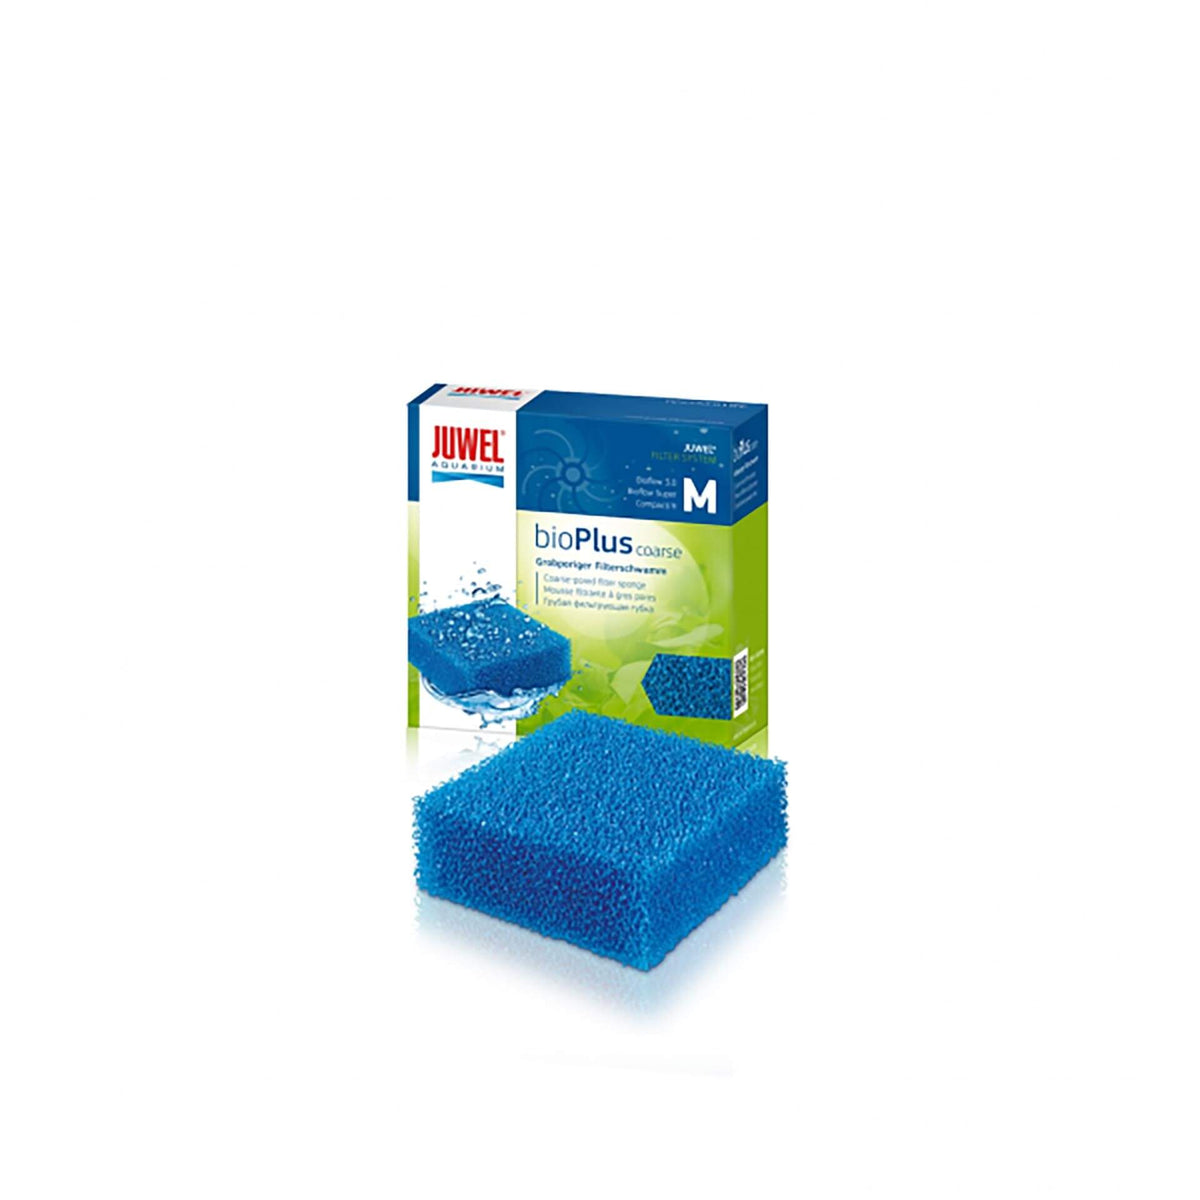 Juwel BioPlus Filter Sponge Coarse Compact - 1 Pack